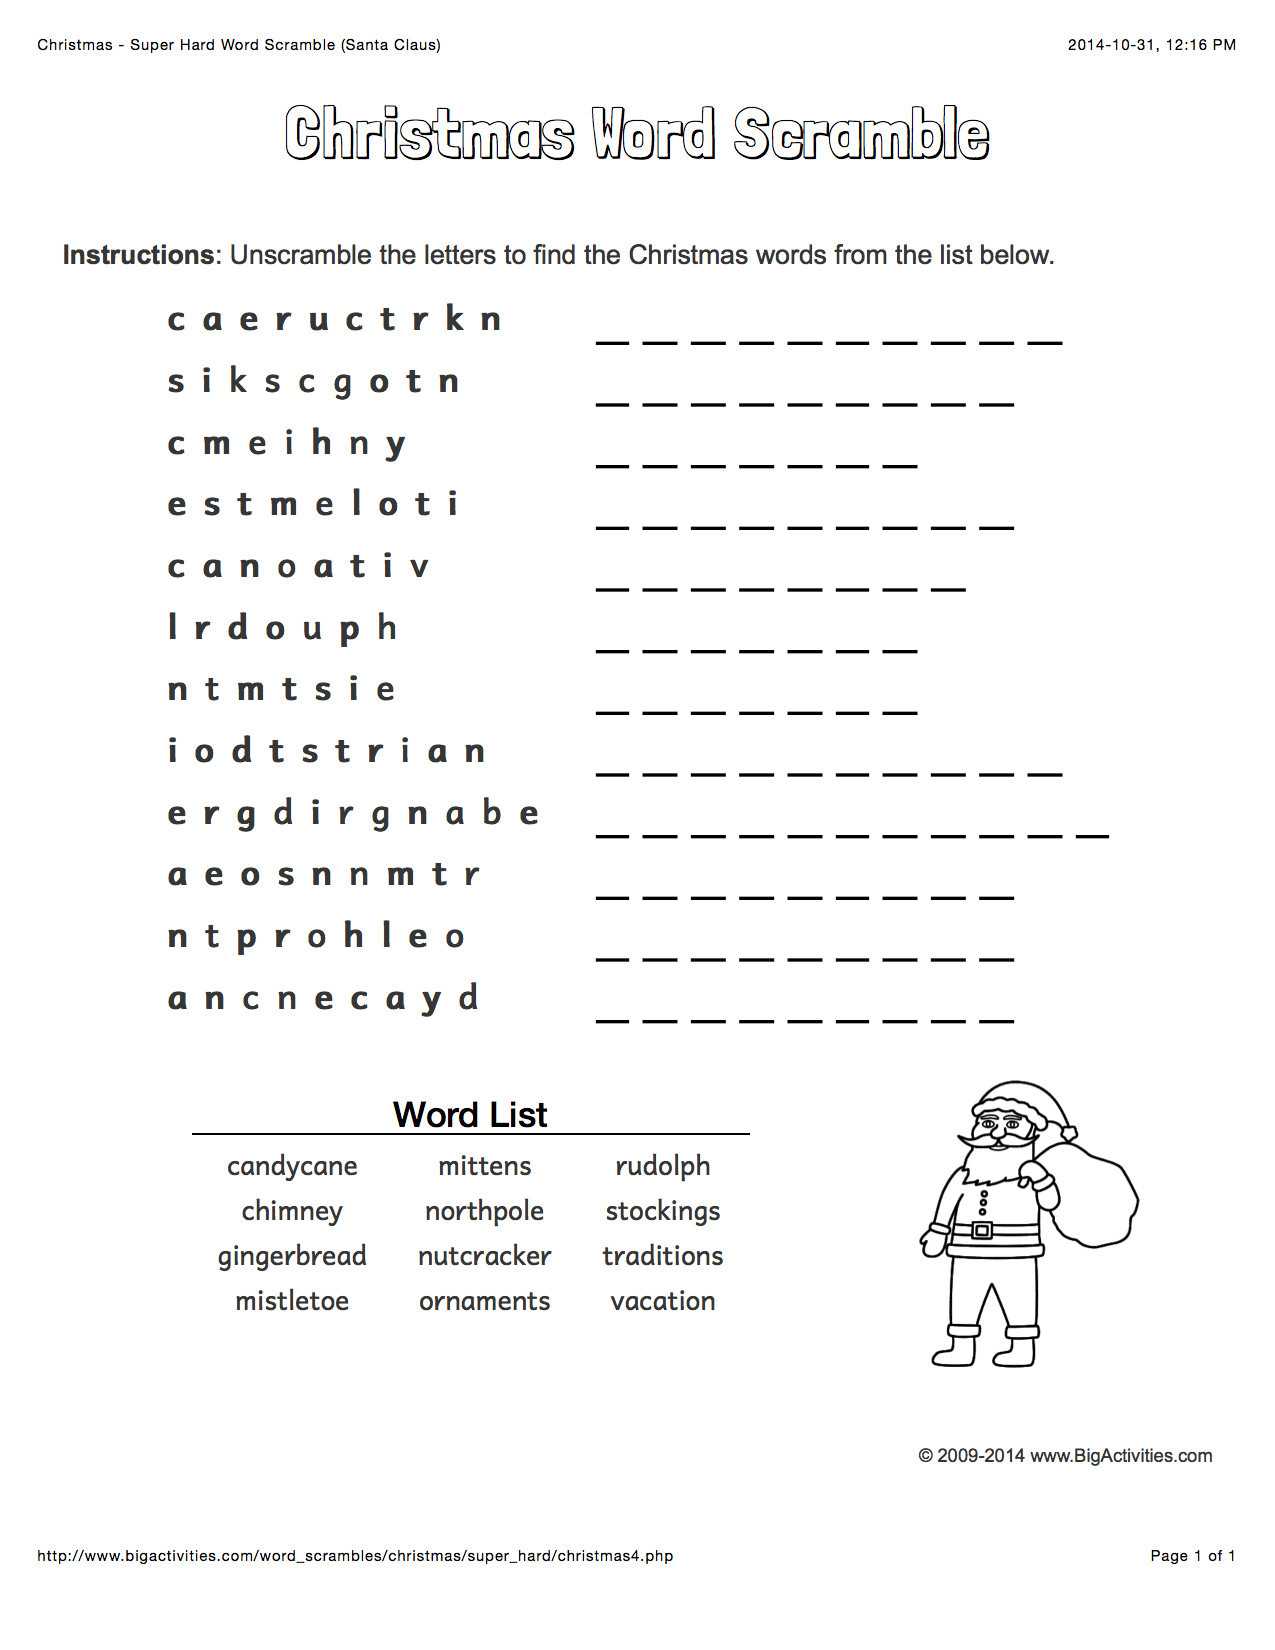 unscramble-words-worksheets-pdf